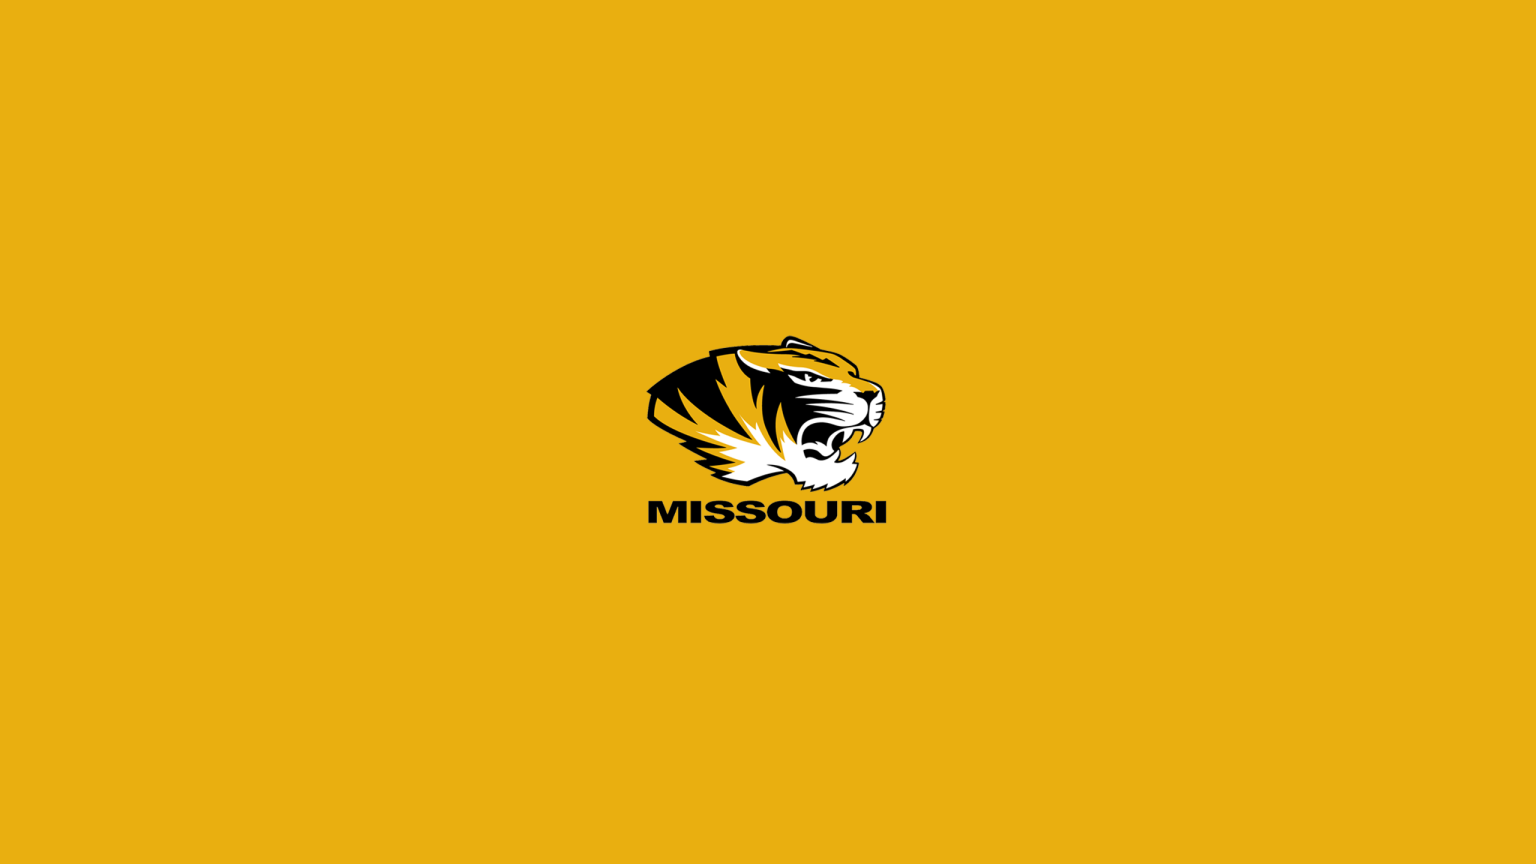 Missouri Tigers Football - NCAAF - Square Bettor